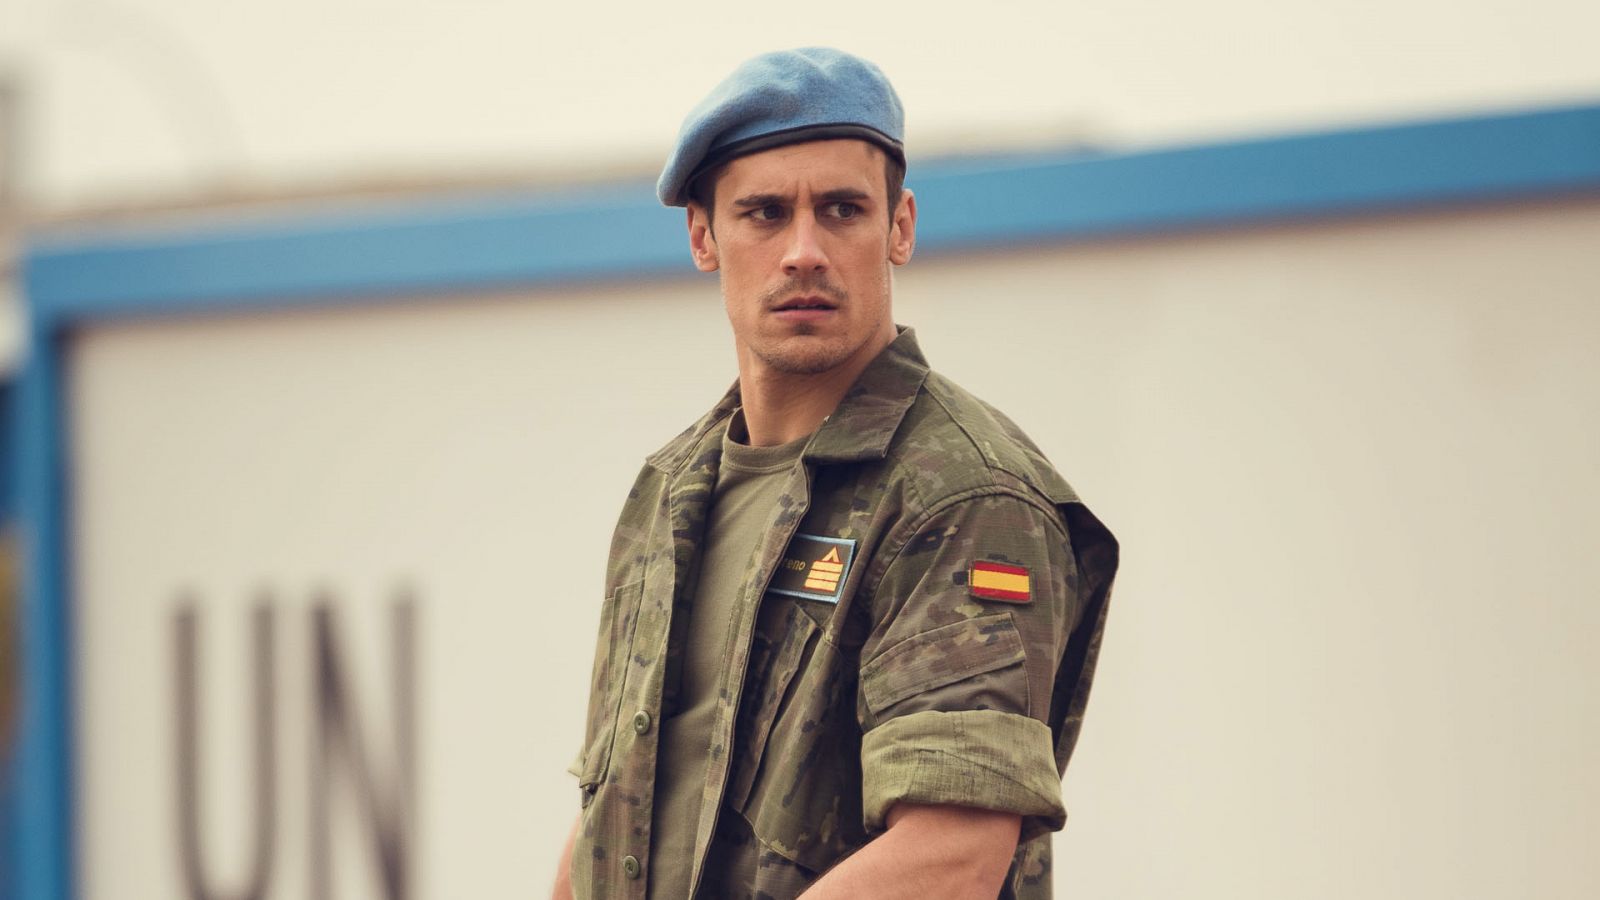 Fuerza de paz - Sargento primero Nacho Moreno (Martiño Rivas)